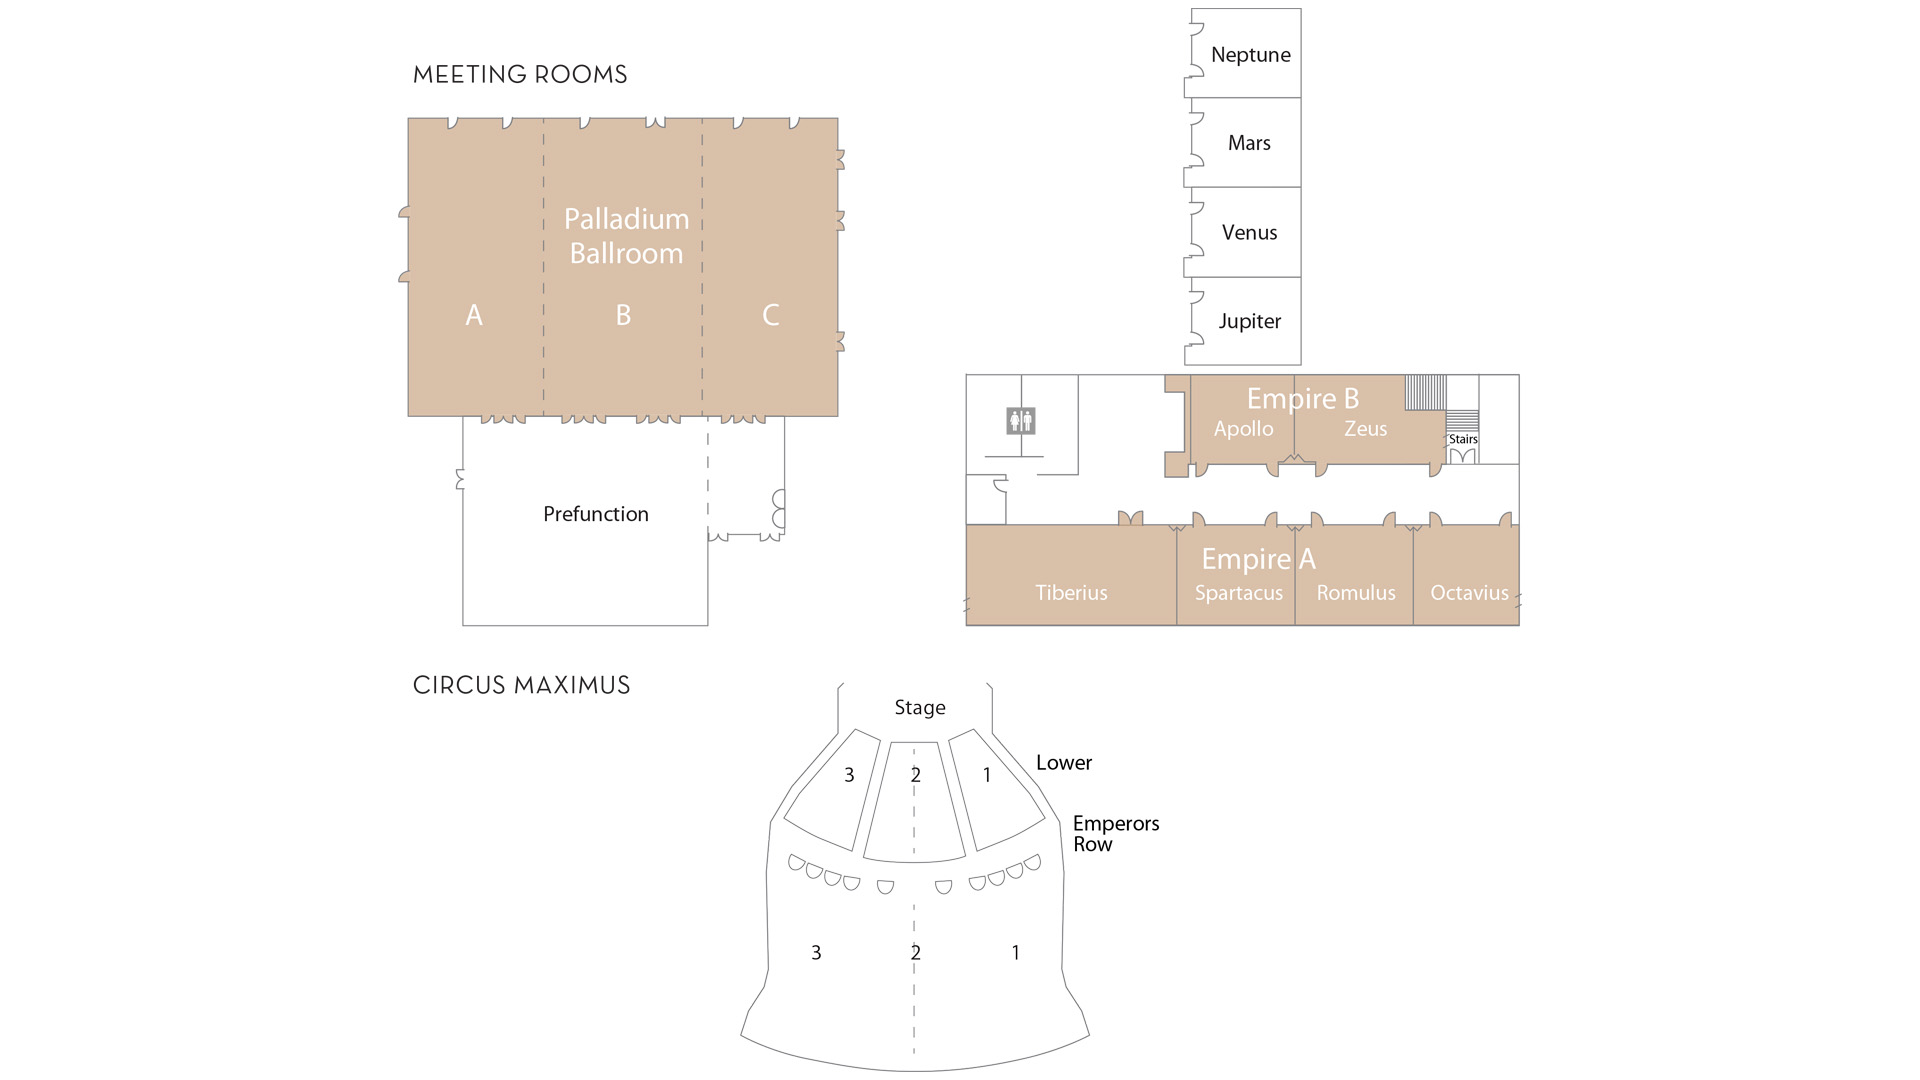 Caesars Palace Property Map & Floor Plans - Las Vegas